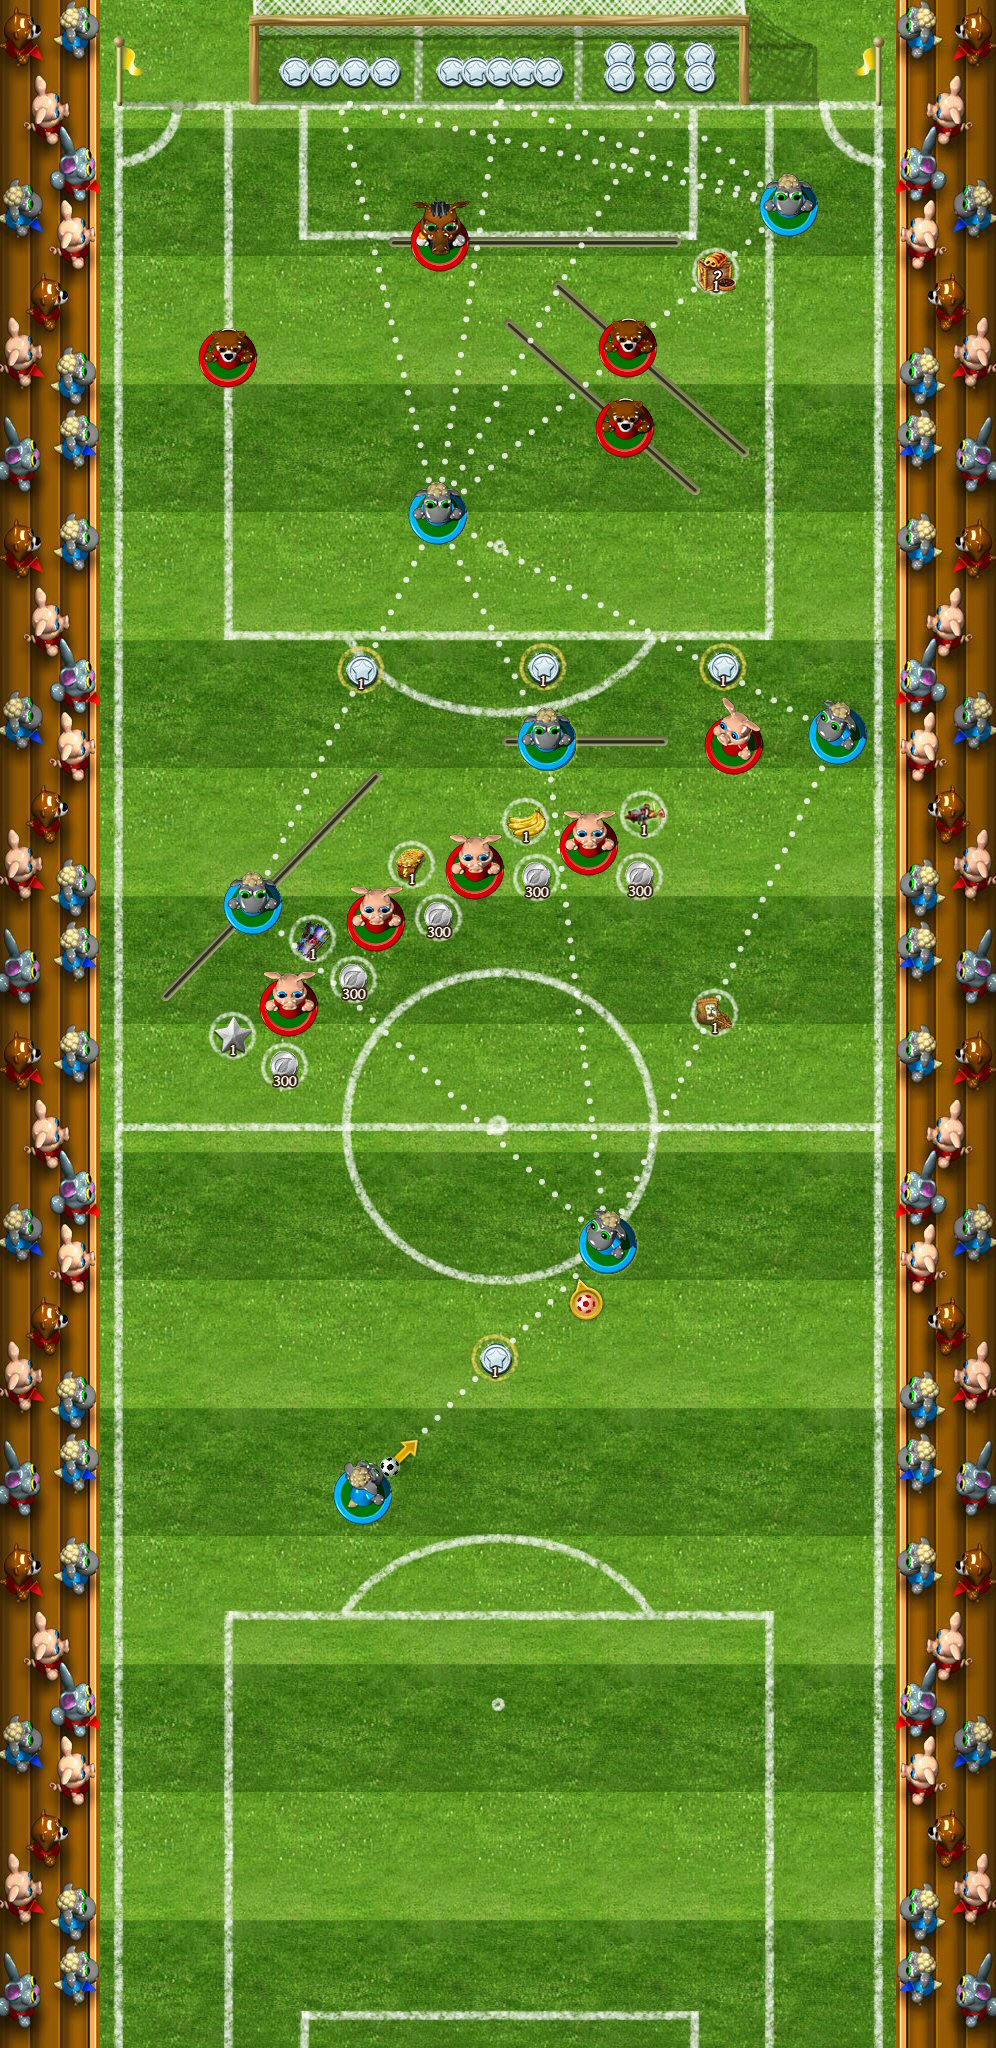 soccerjul2019_layout3.jpg